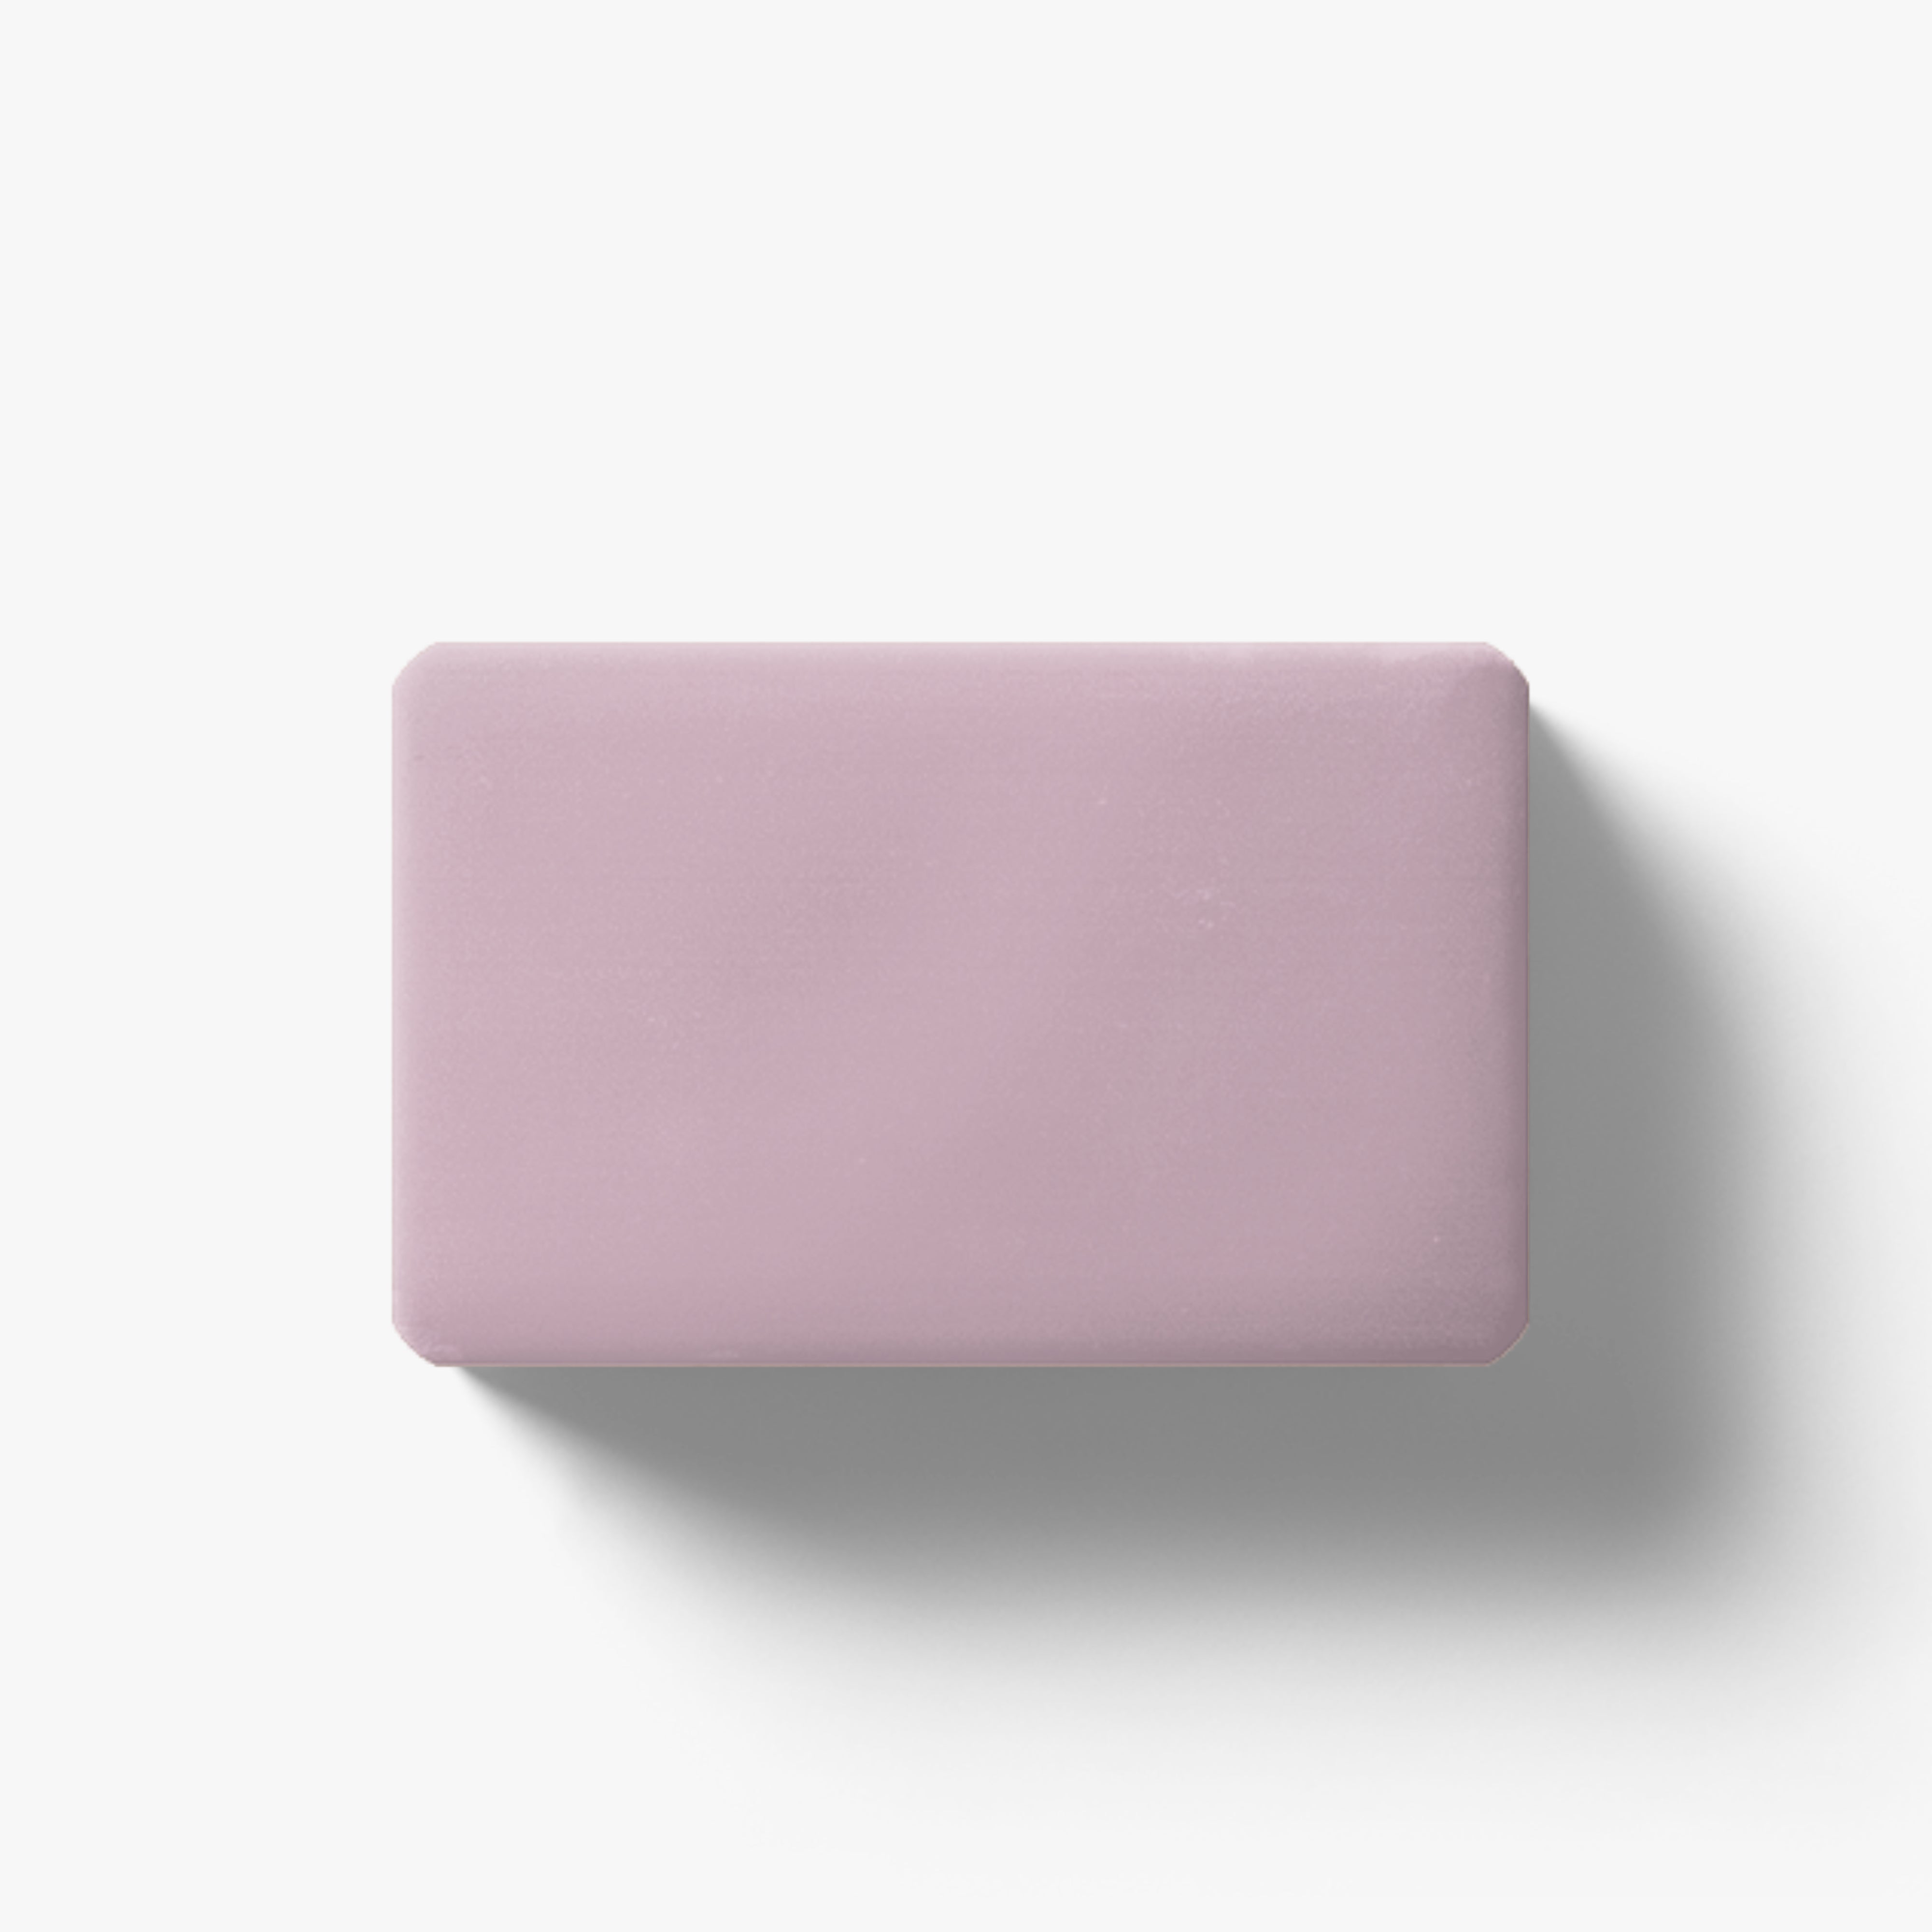 Shea Rose Soap Bar - Table- Many size options